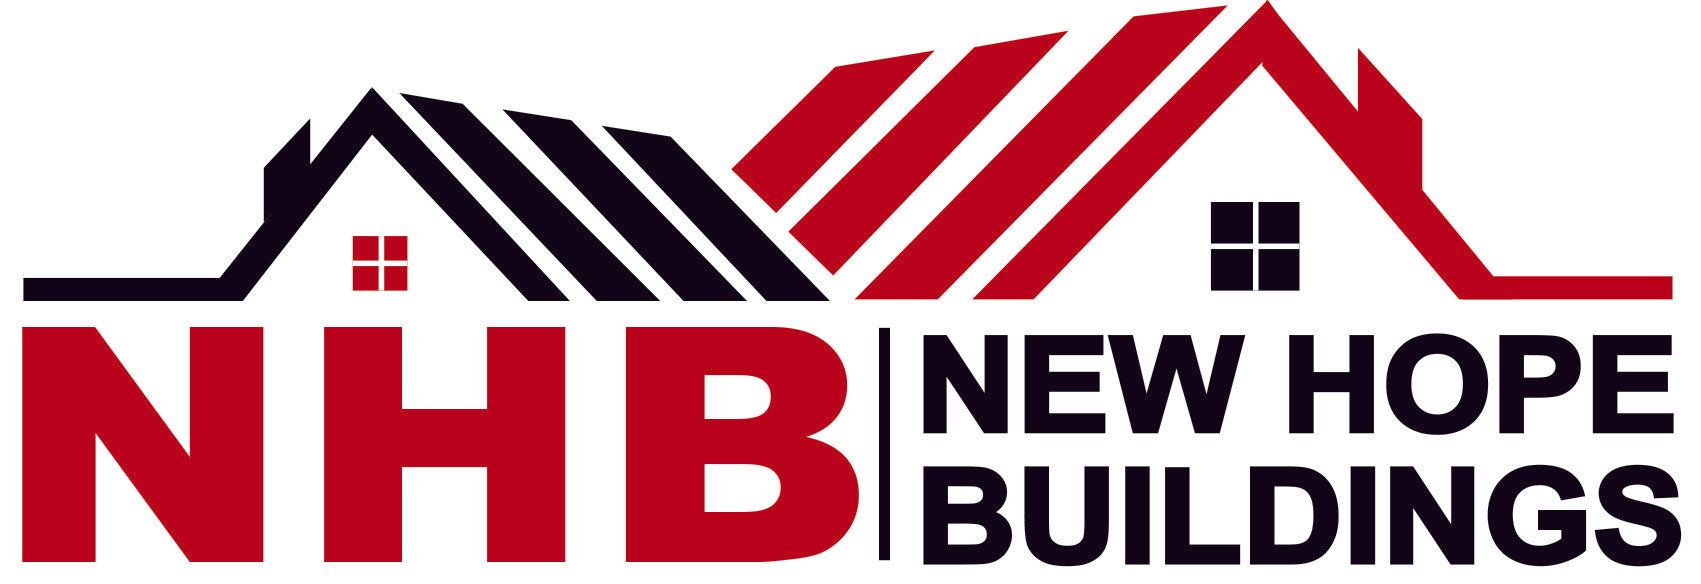 New Hope Buildings logo